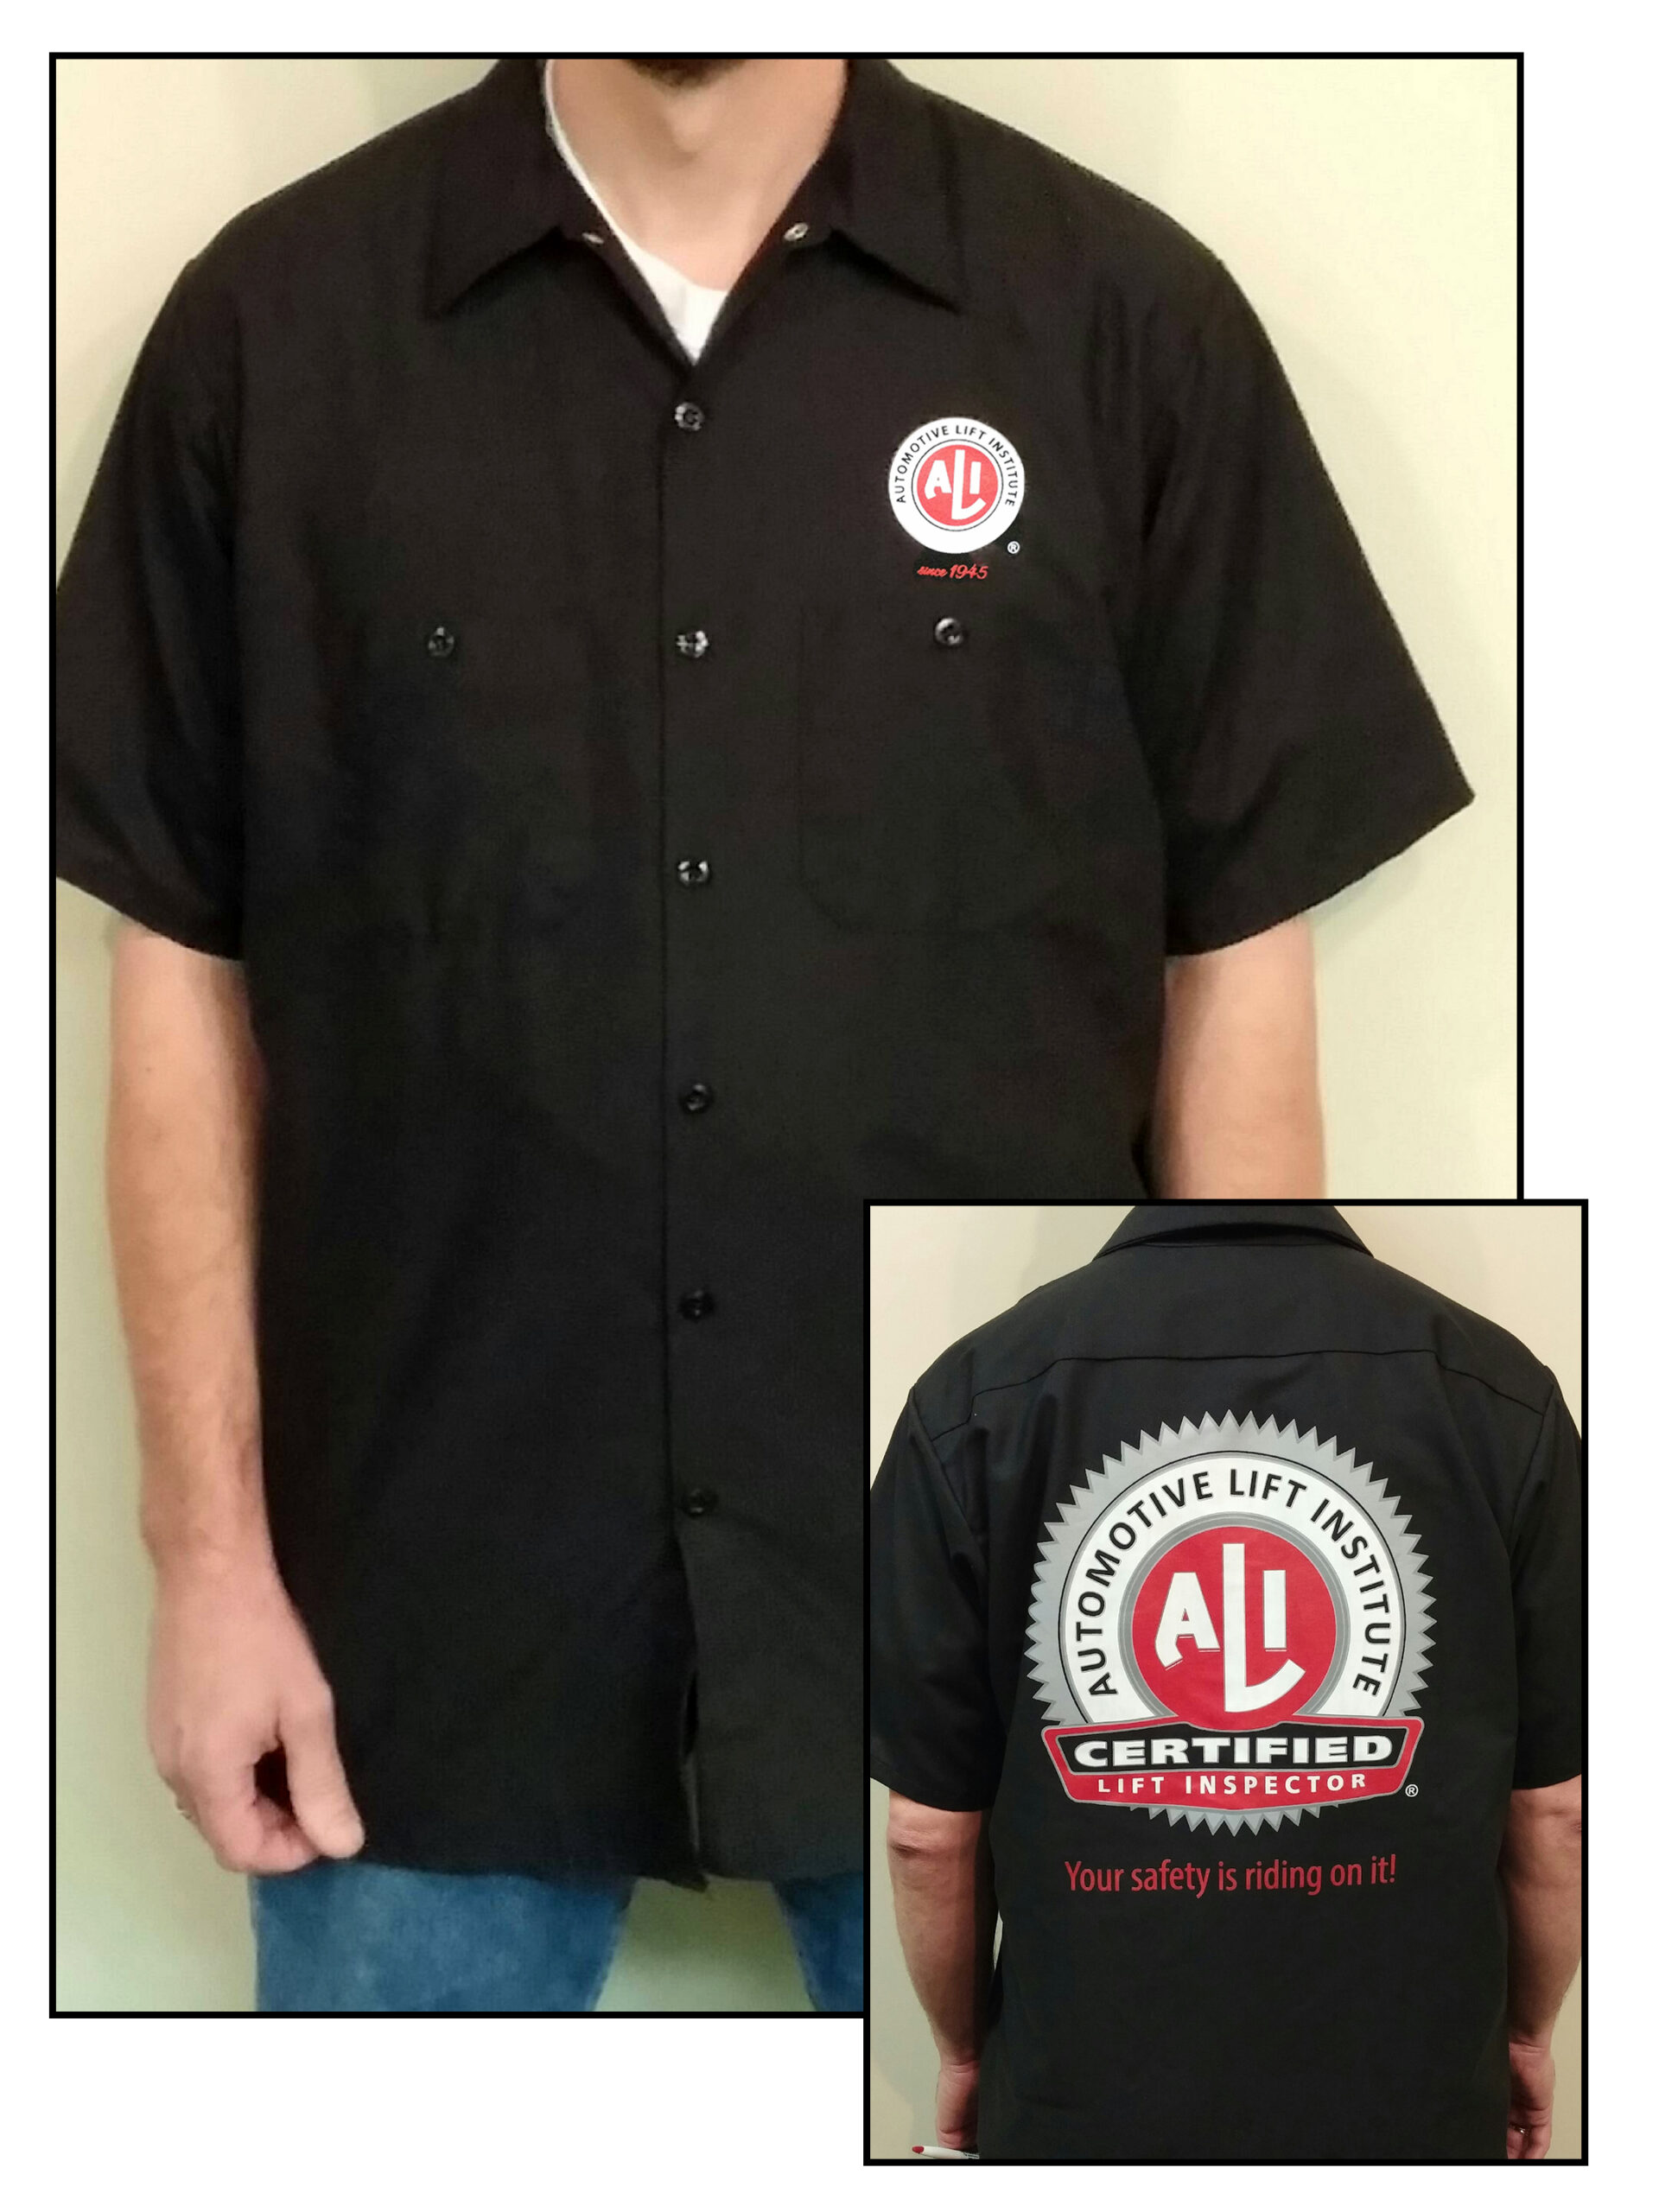 ALI Certified Lift Inspector Work Shirt Image